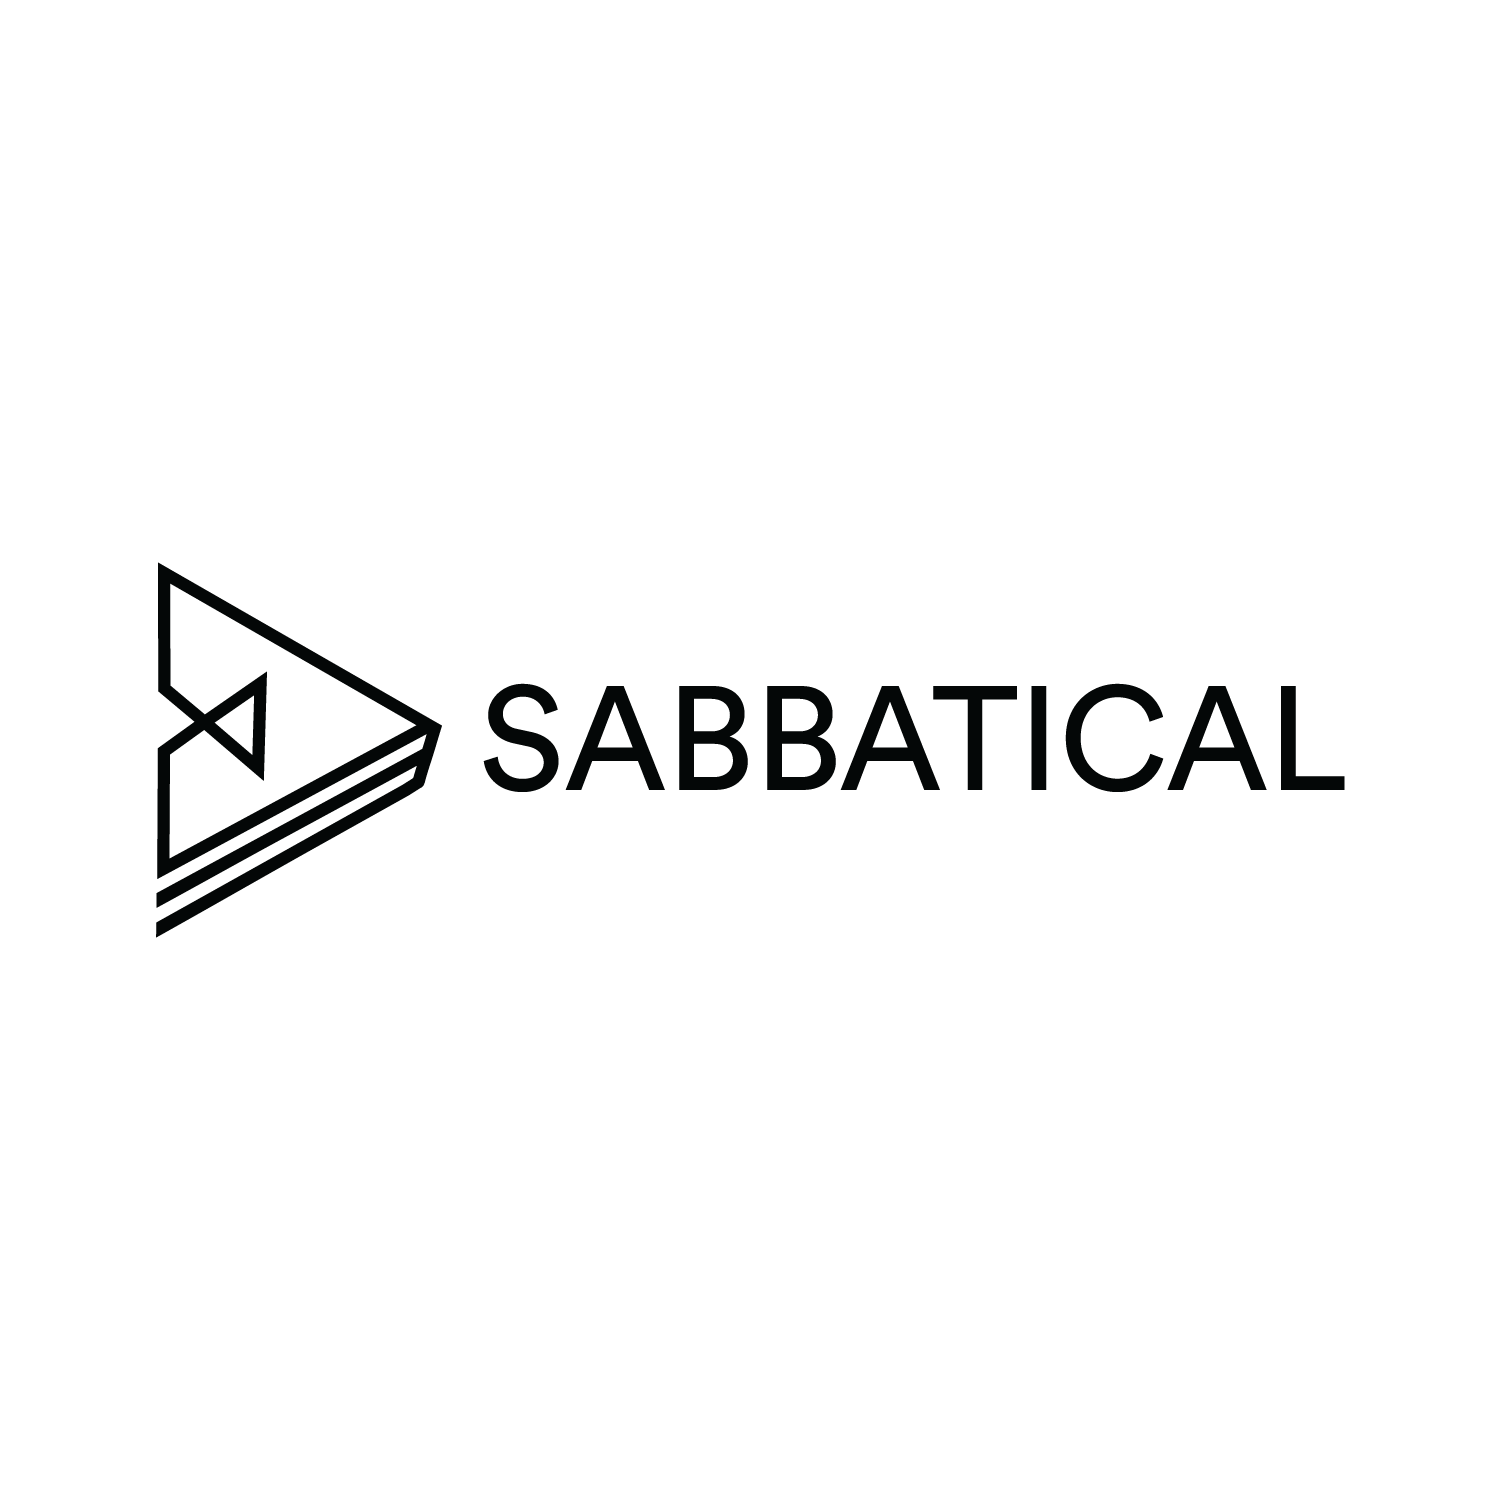 Sabbatical-bw